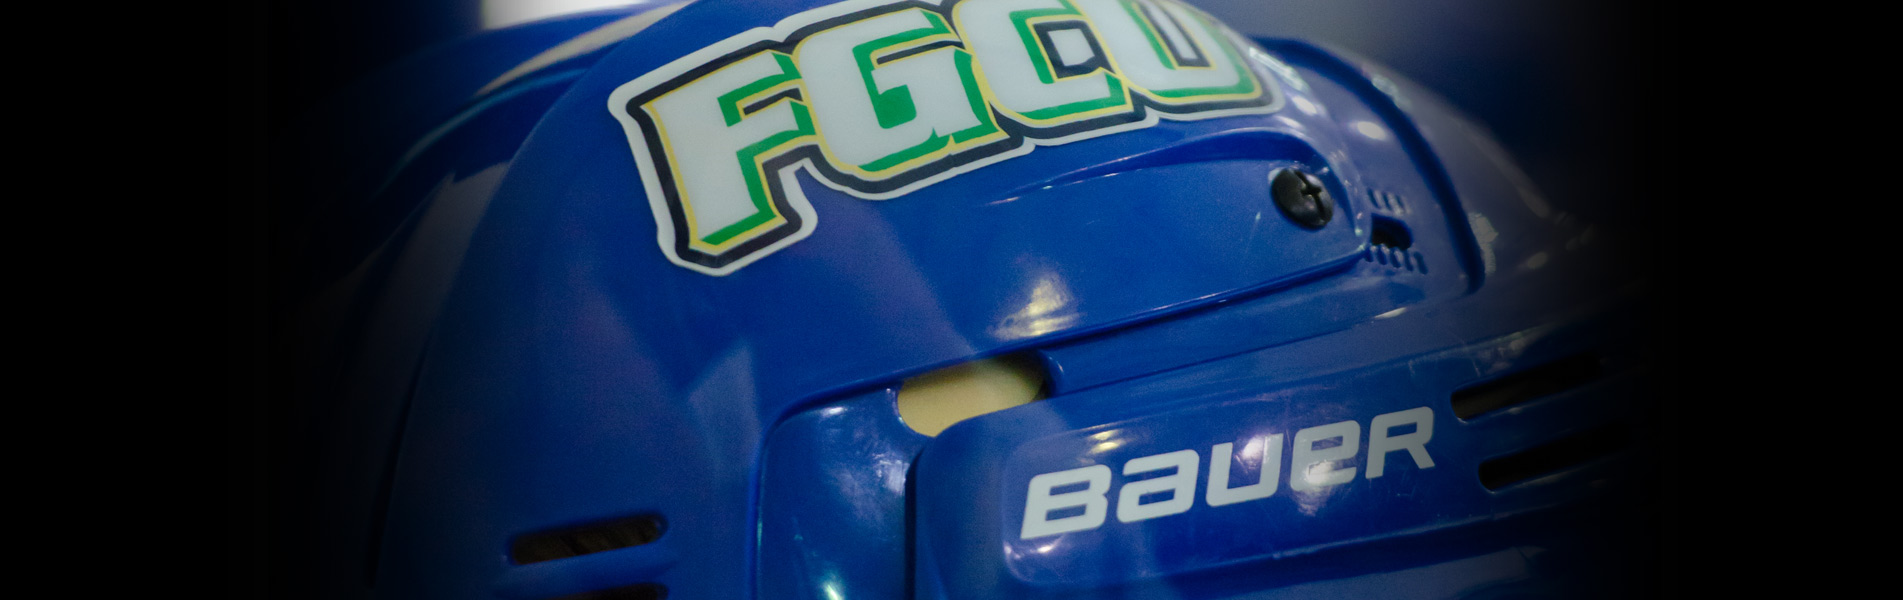 FGCU Hockey Club - helmet